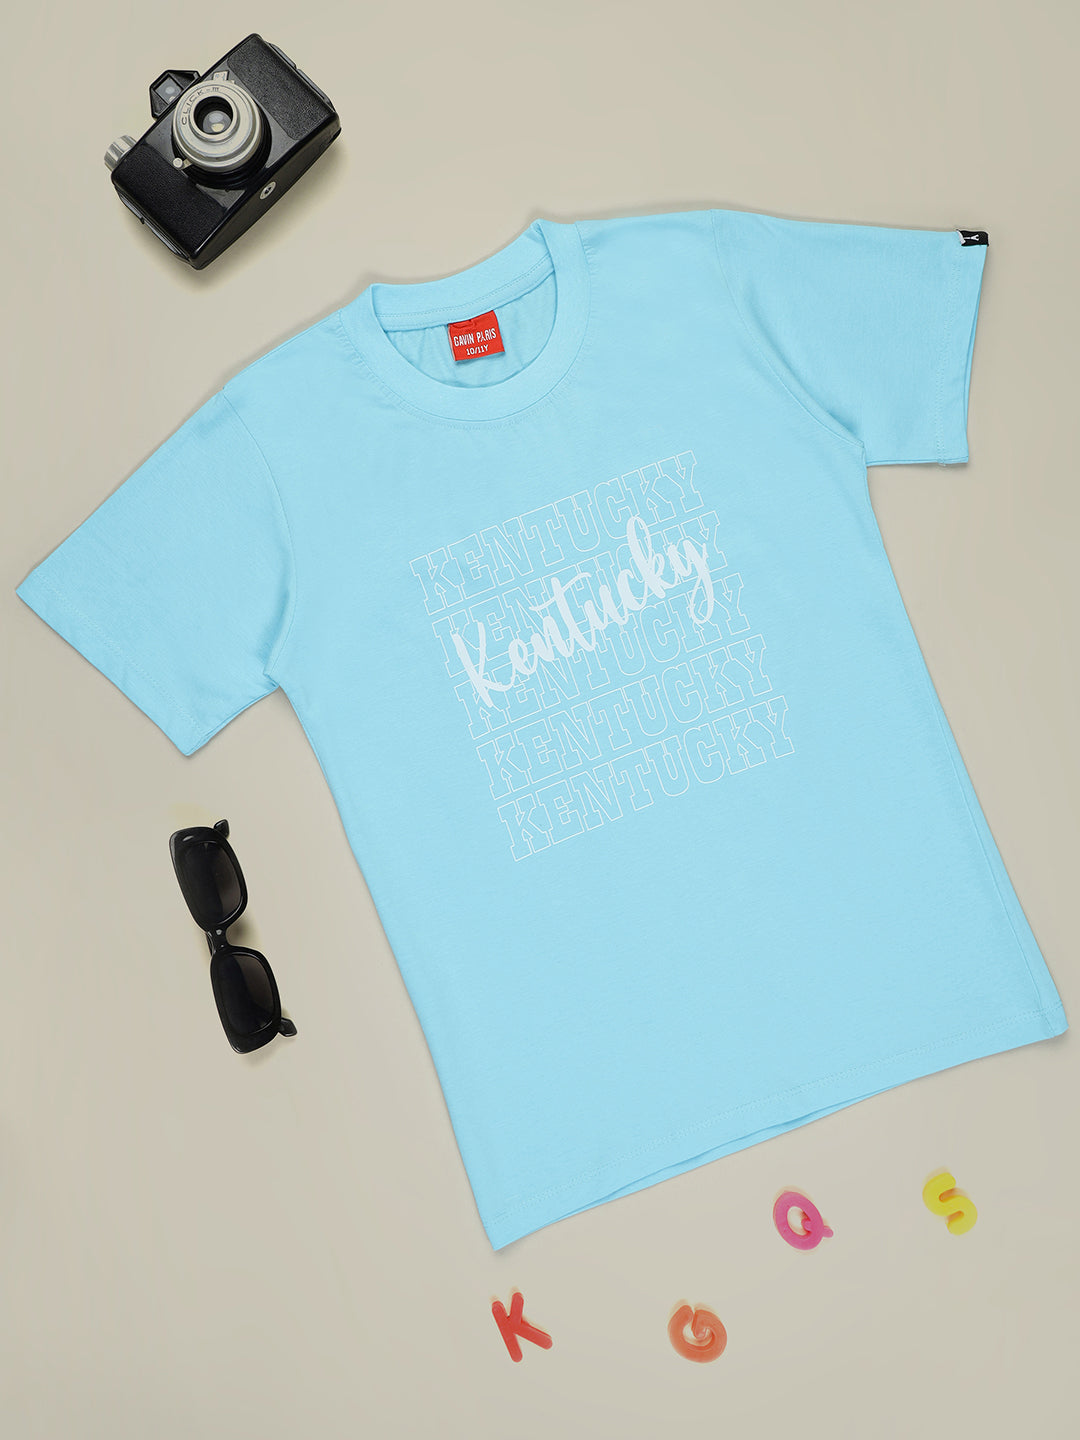 Kentucky T-shirts for Boys & Girls